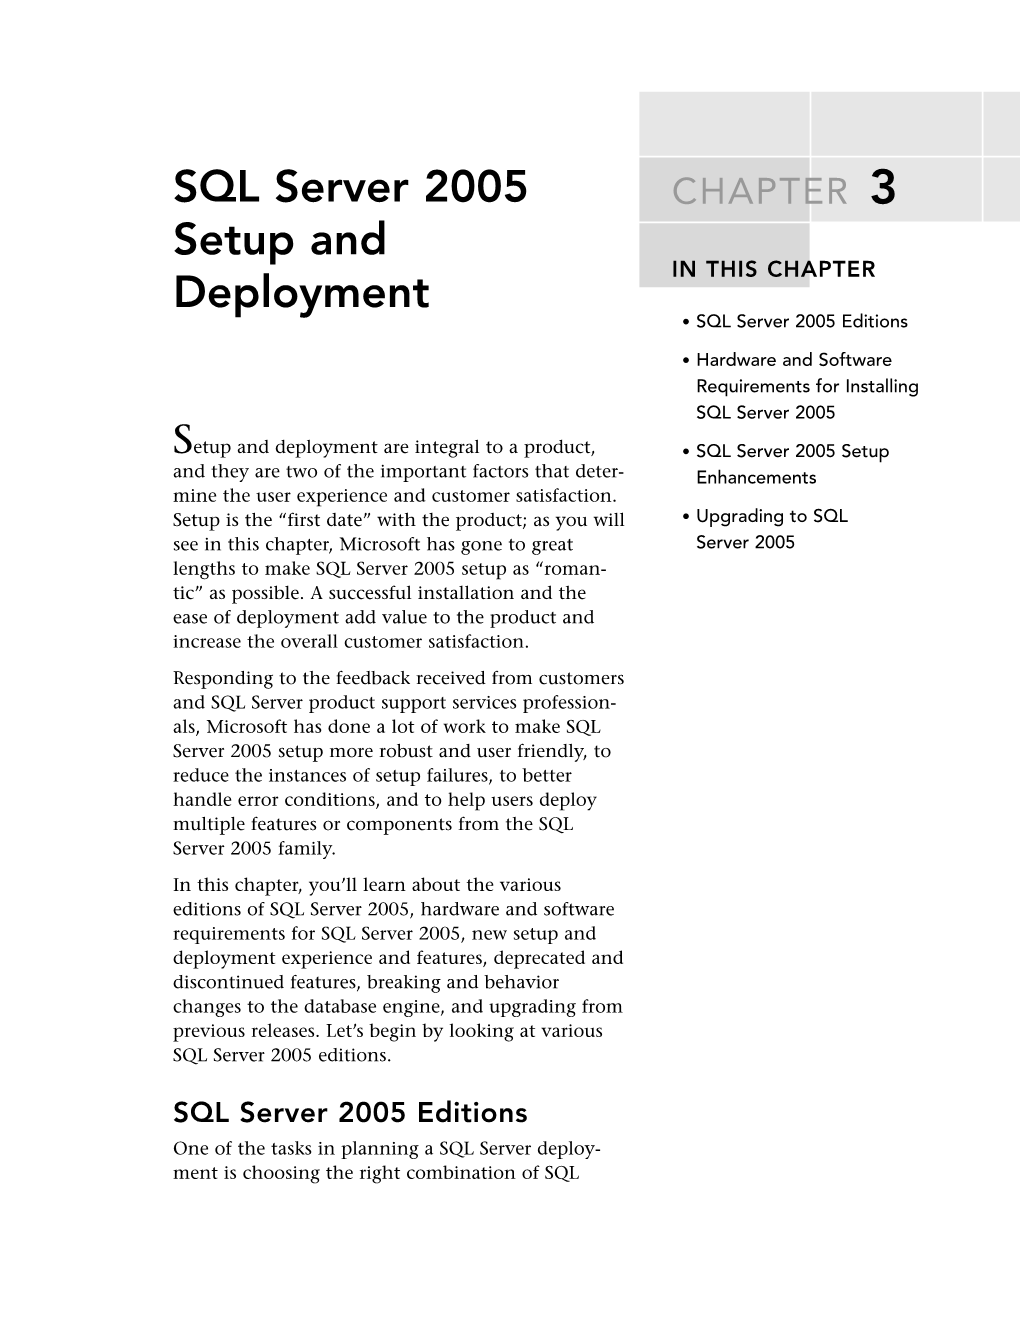 SQL Server 2005 Setup and Deployment